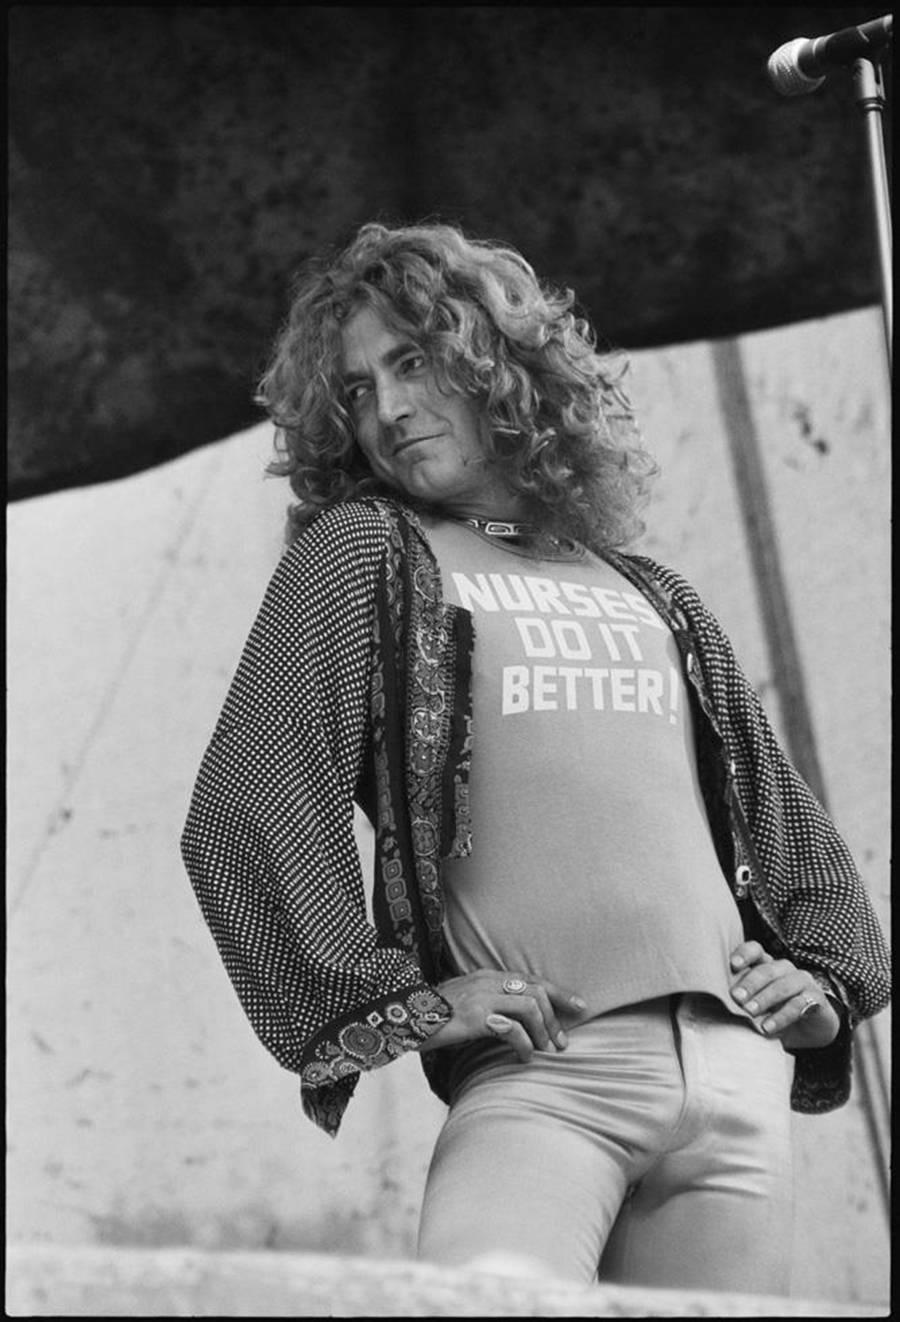 Michael Zagaris Black and White Photograph – Robert Plant